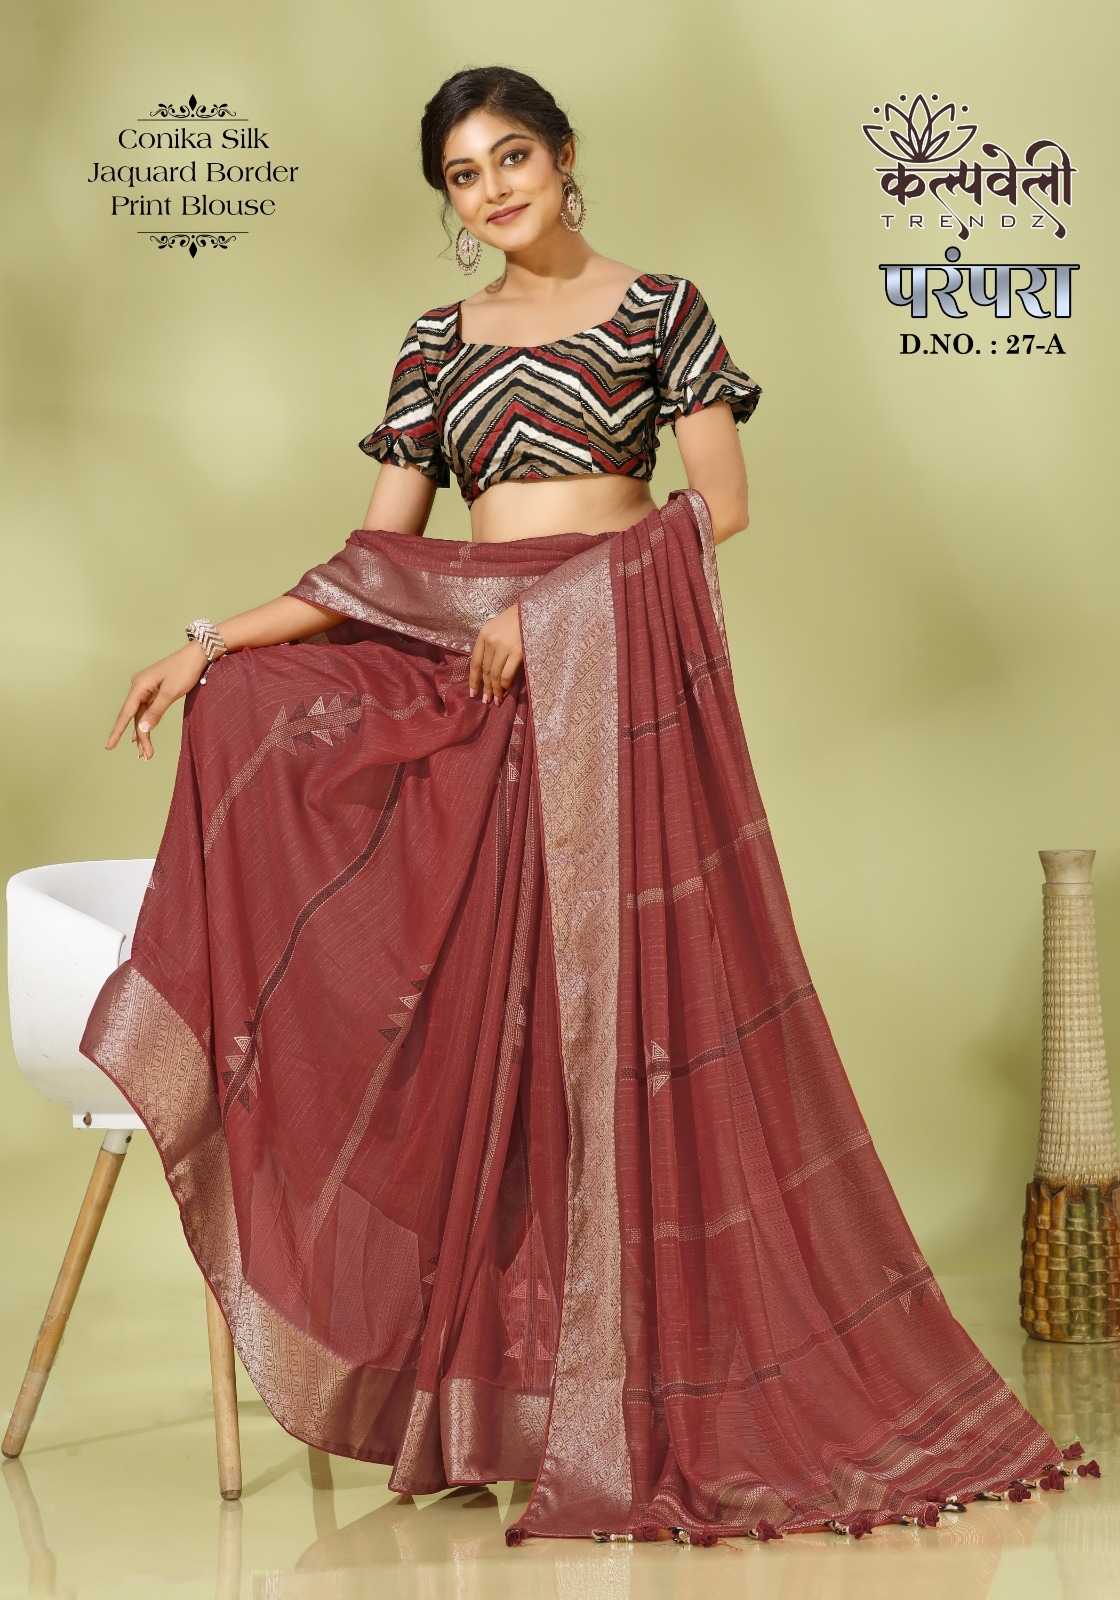 kalpavelly trendz parampara vol 27 fancy silk sarees